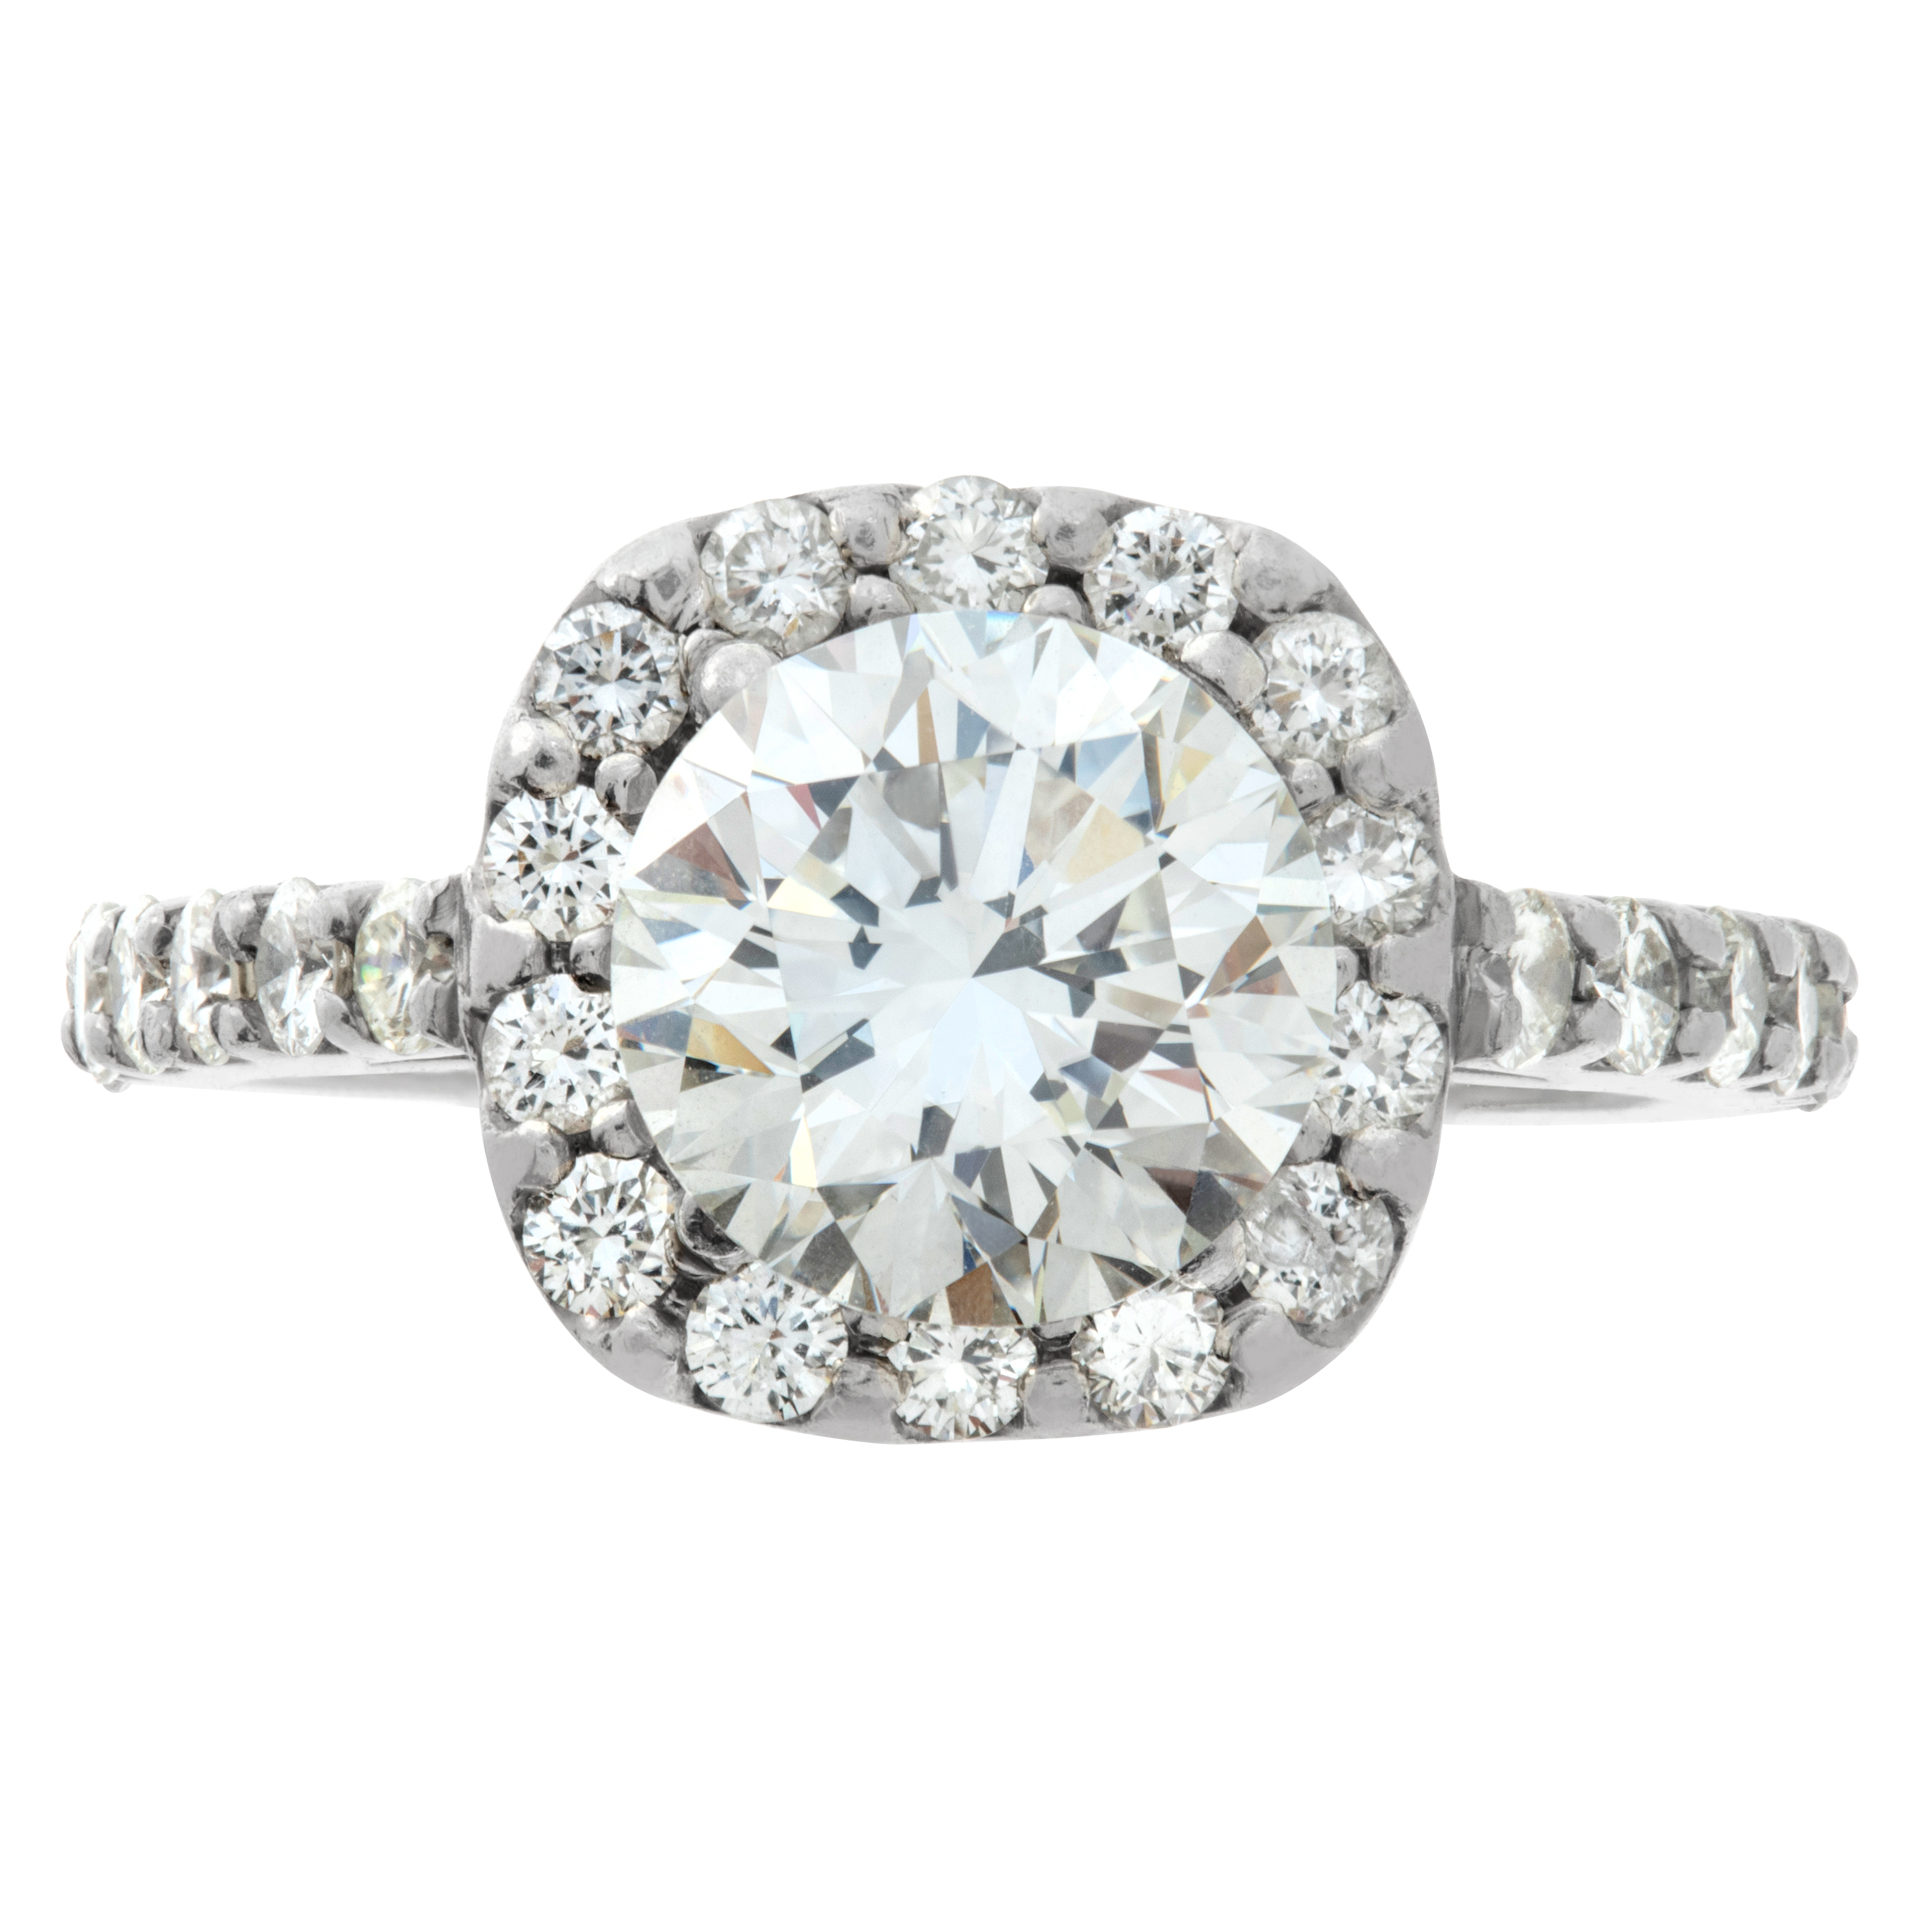 GIA certified round brilliant cut diamond 2.03 carat ( I color, SI1 clarity) ring set in platrinum image 2